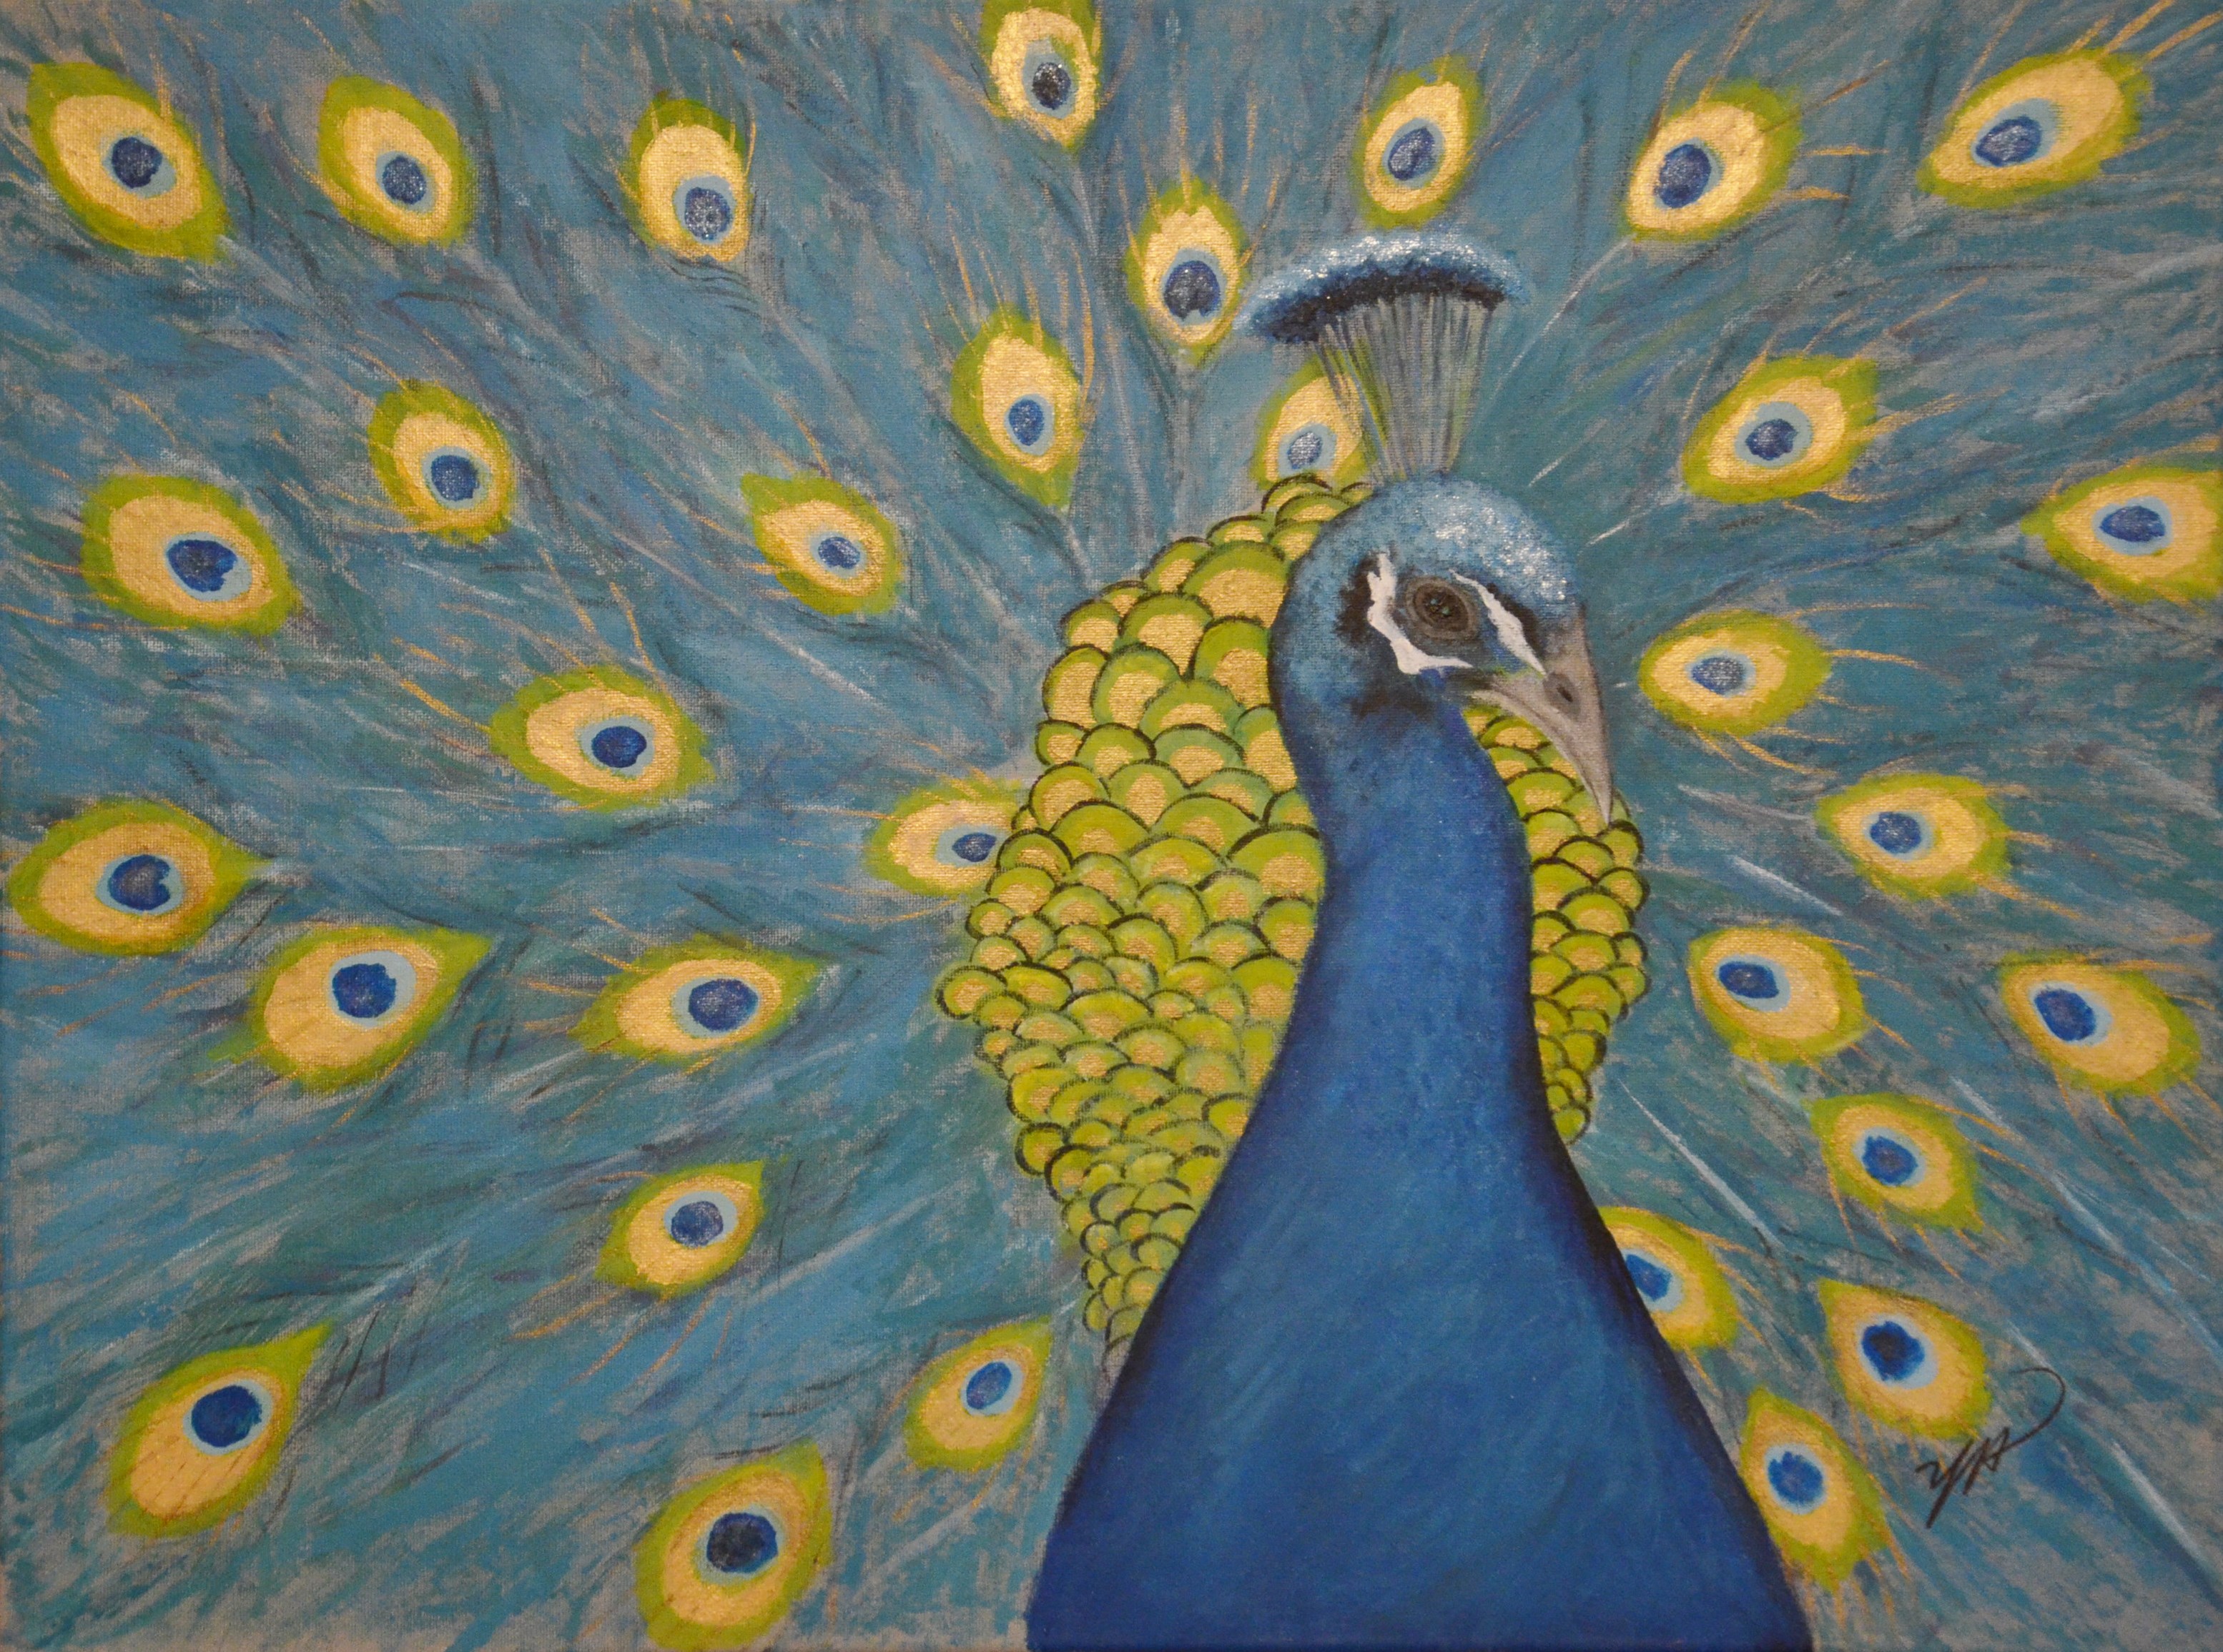 "Peacock" by Yi-Ting Hsu